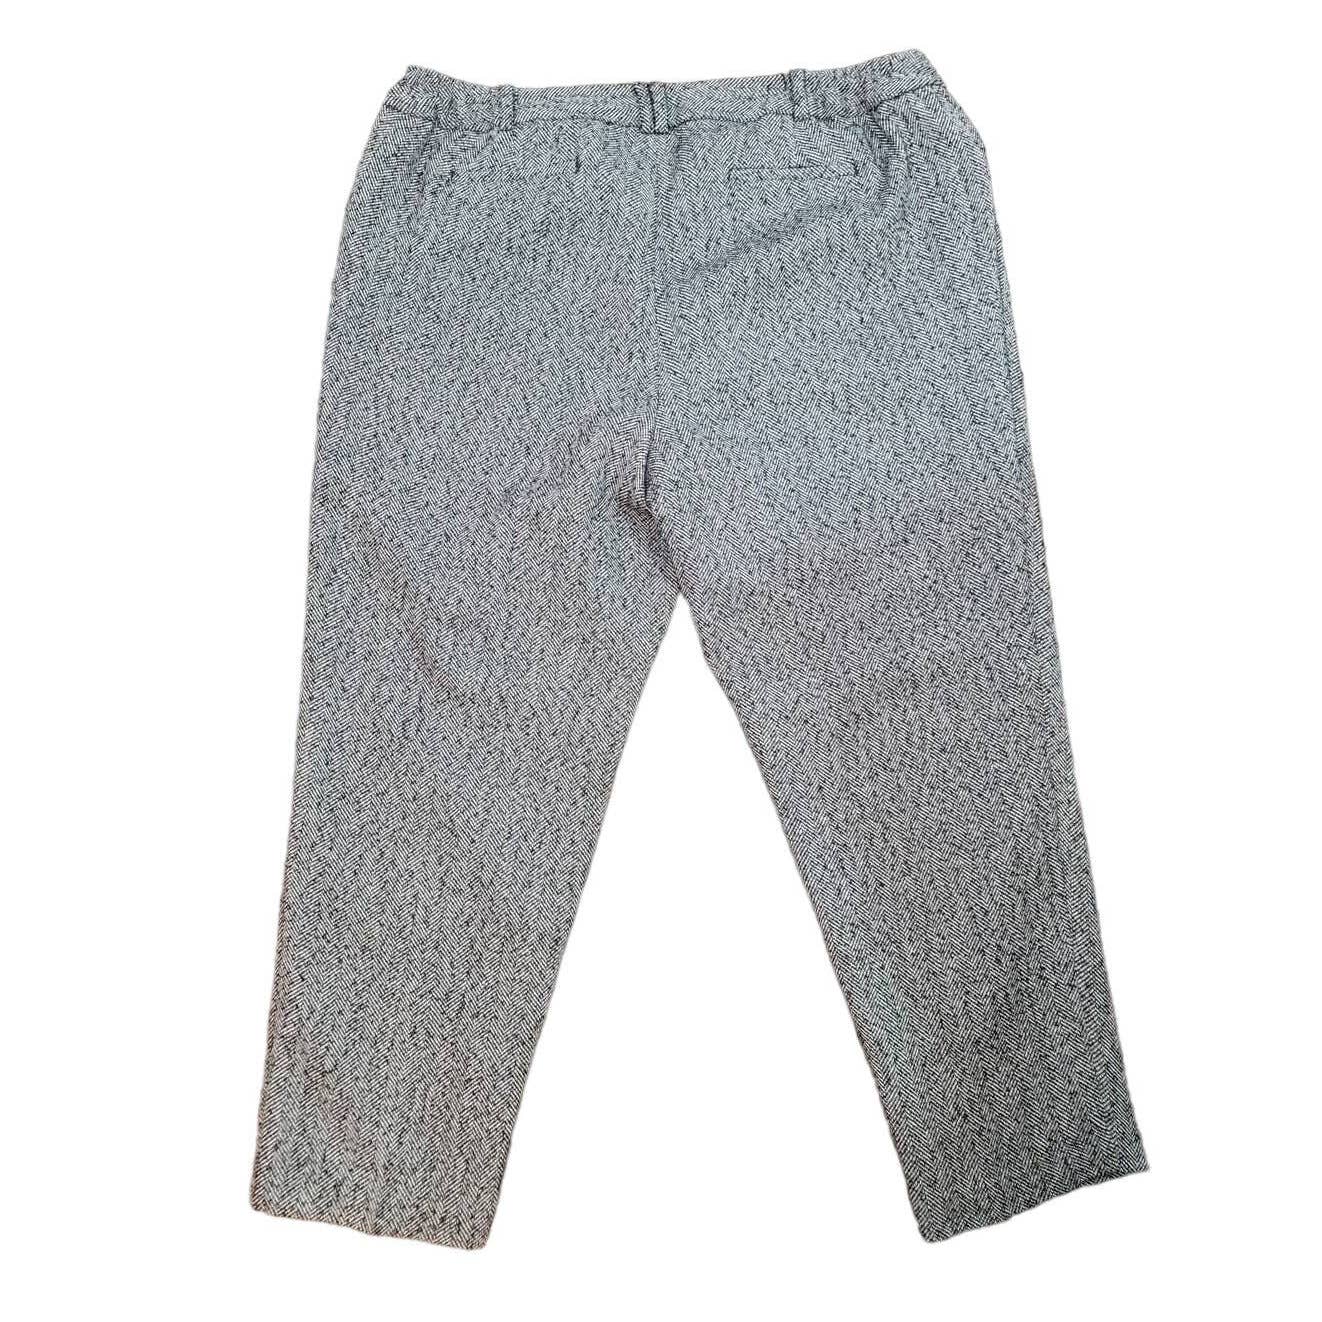 Talbots Grey Chino Work Pants Hampshire Herringbone Wool Plus Size 20W